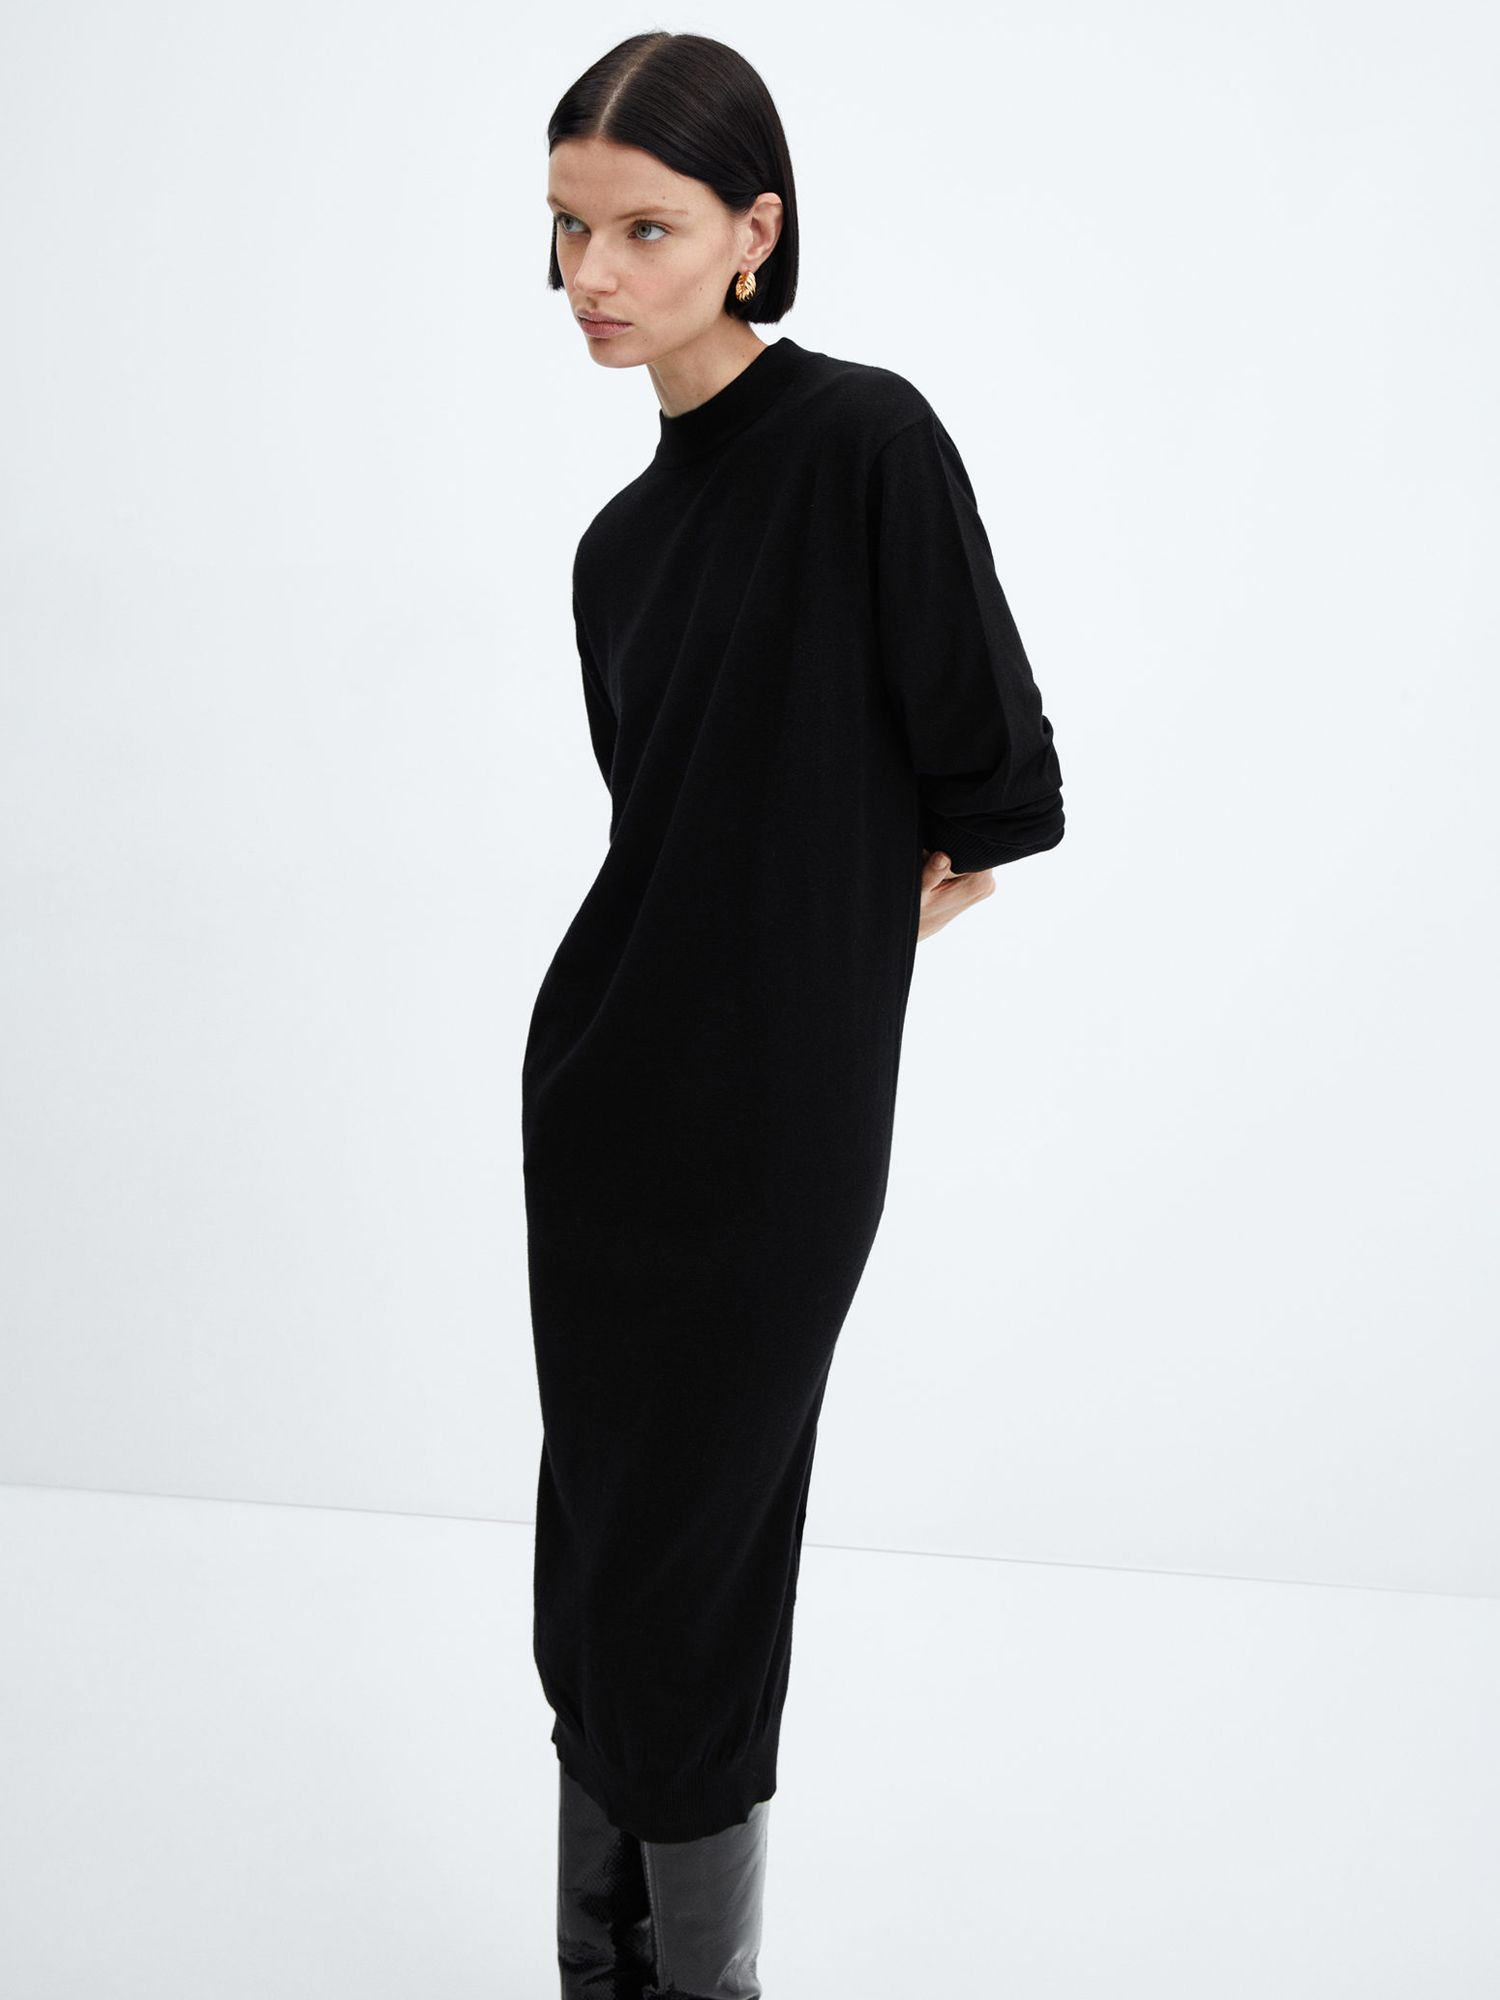 Mango Vieira Round Neck Knitted Dress, Black at John Lewis & Partners